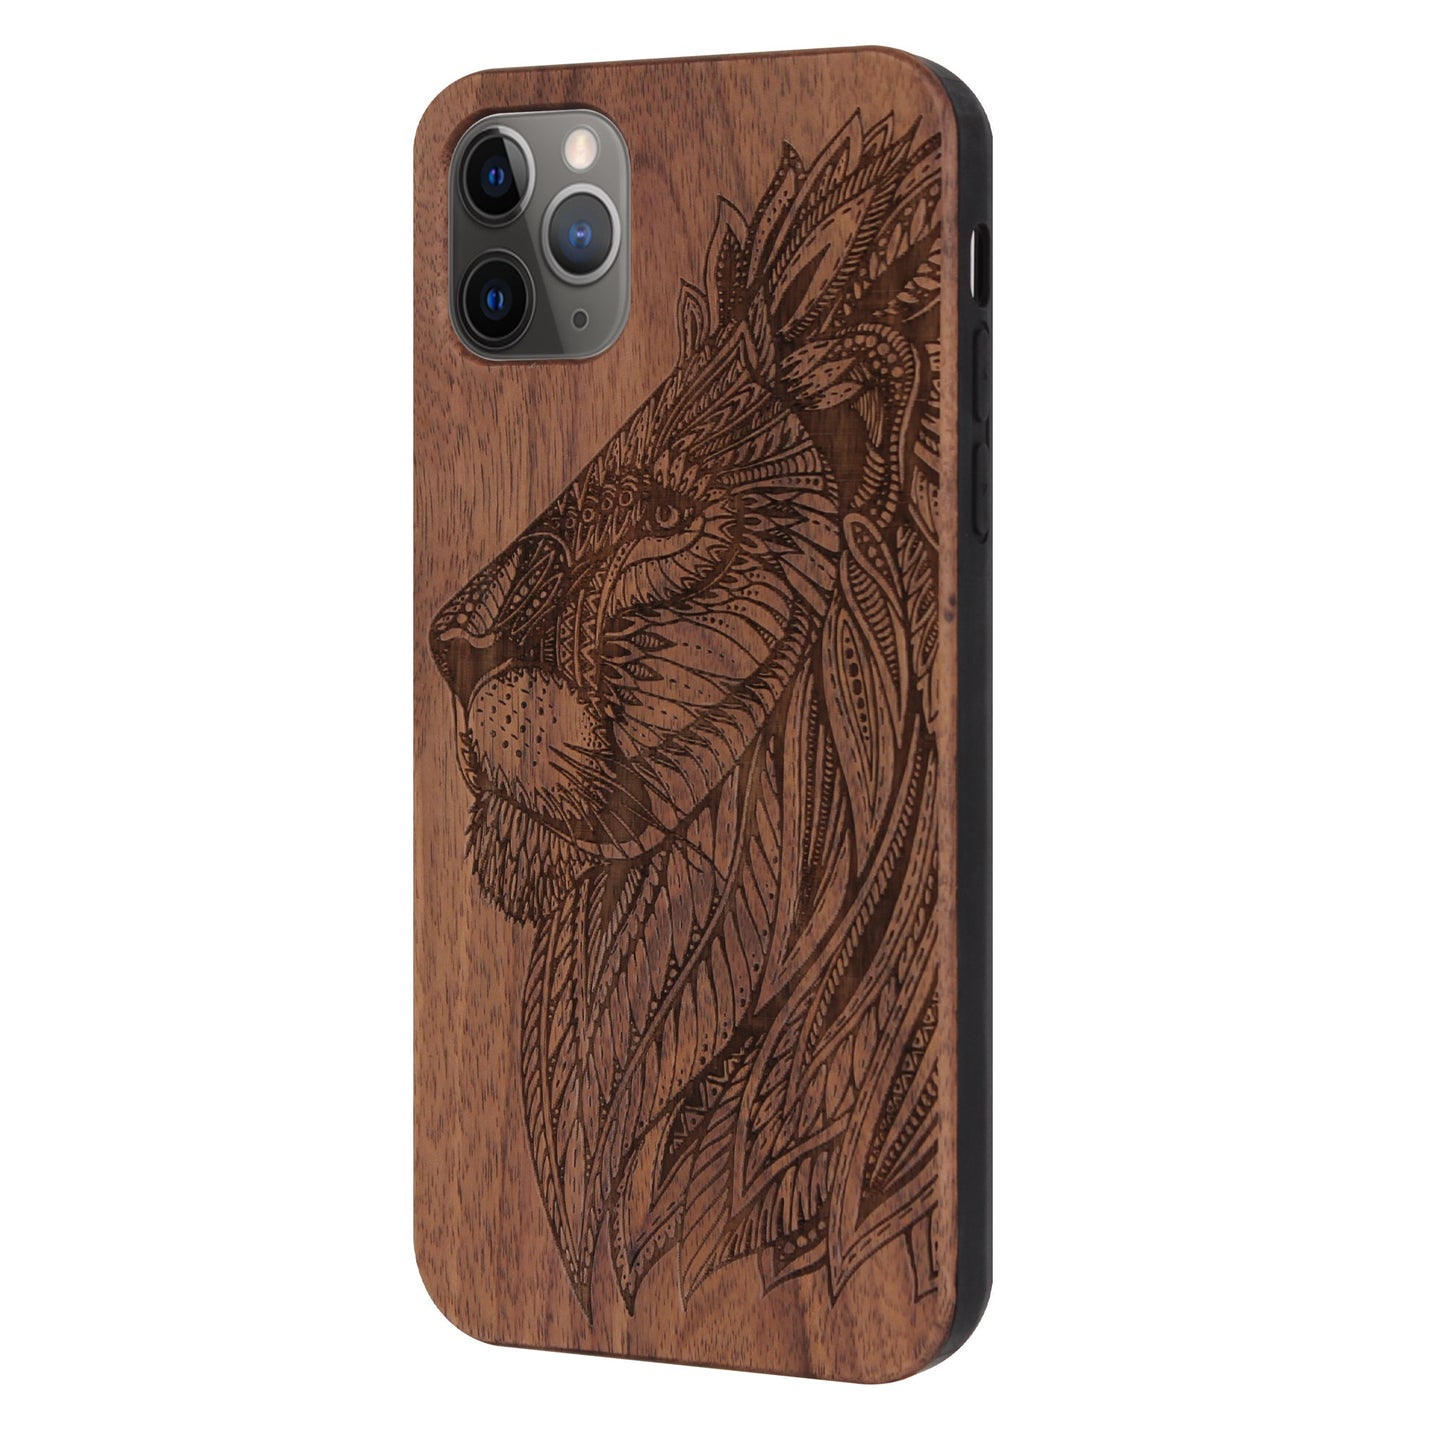 Walnut lion Eden case for iPhone 11 Pro 